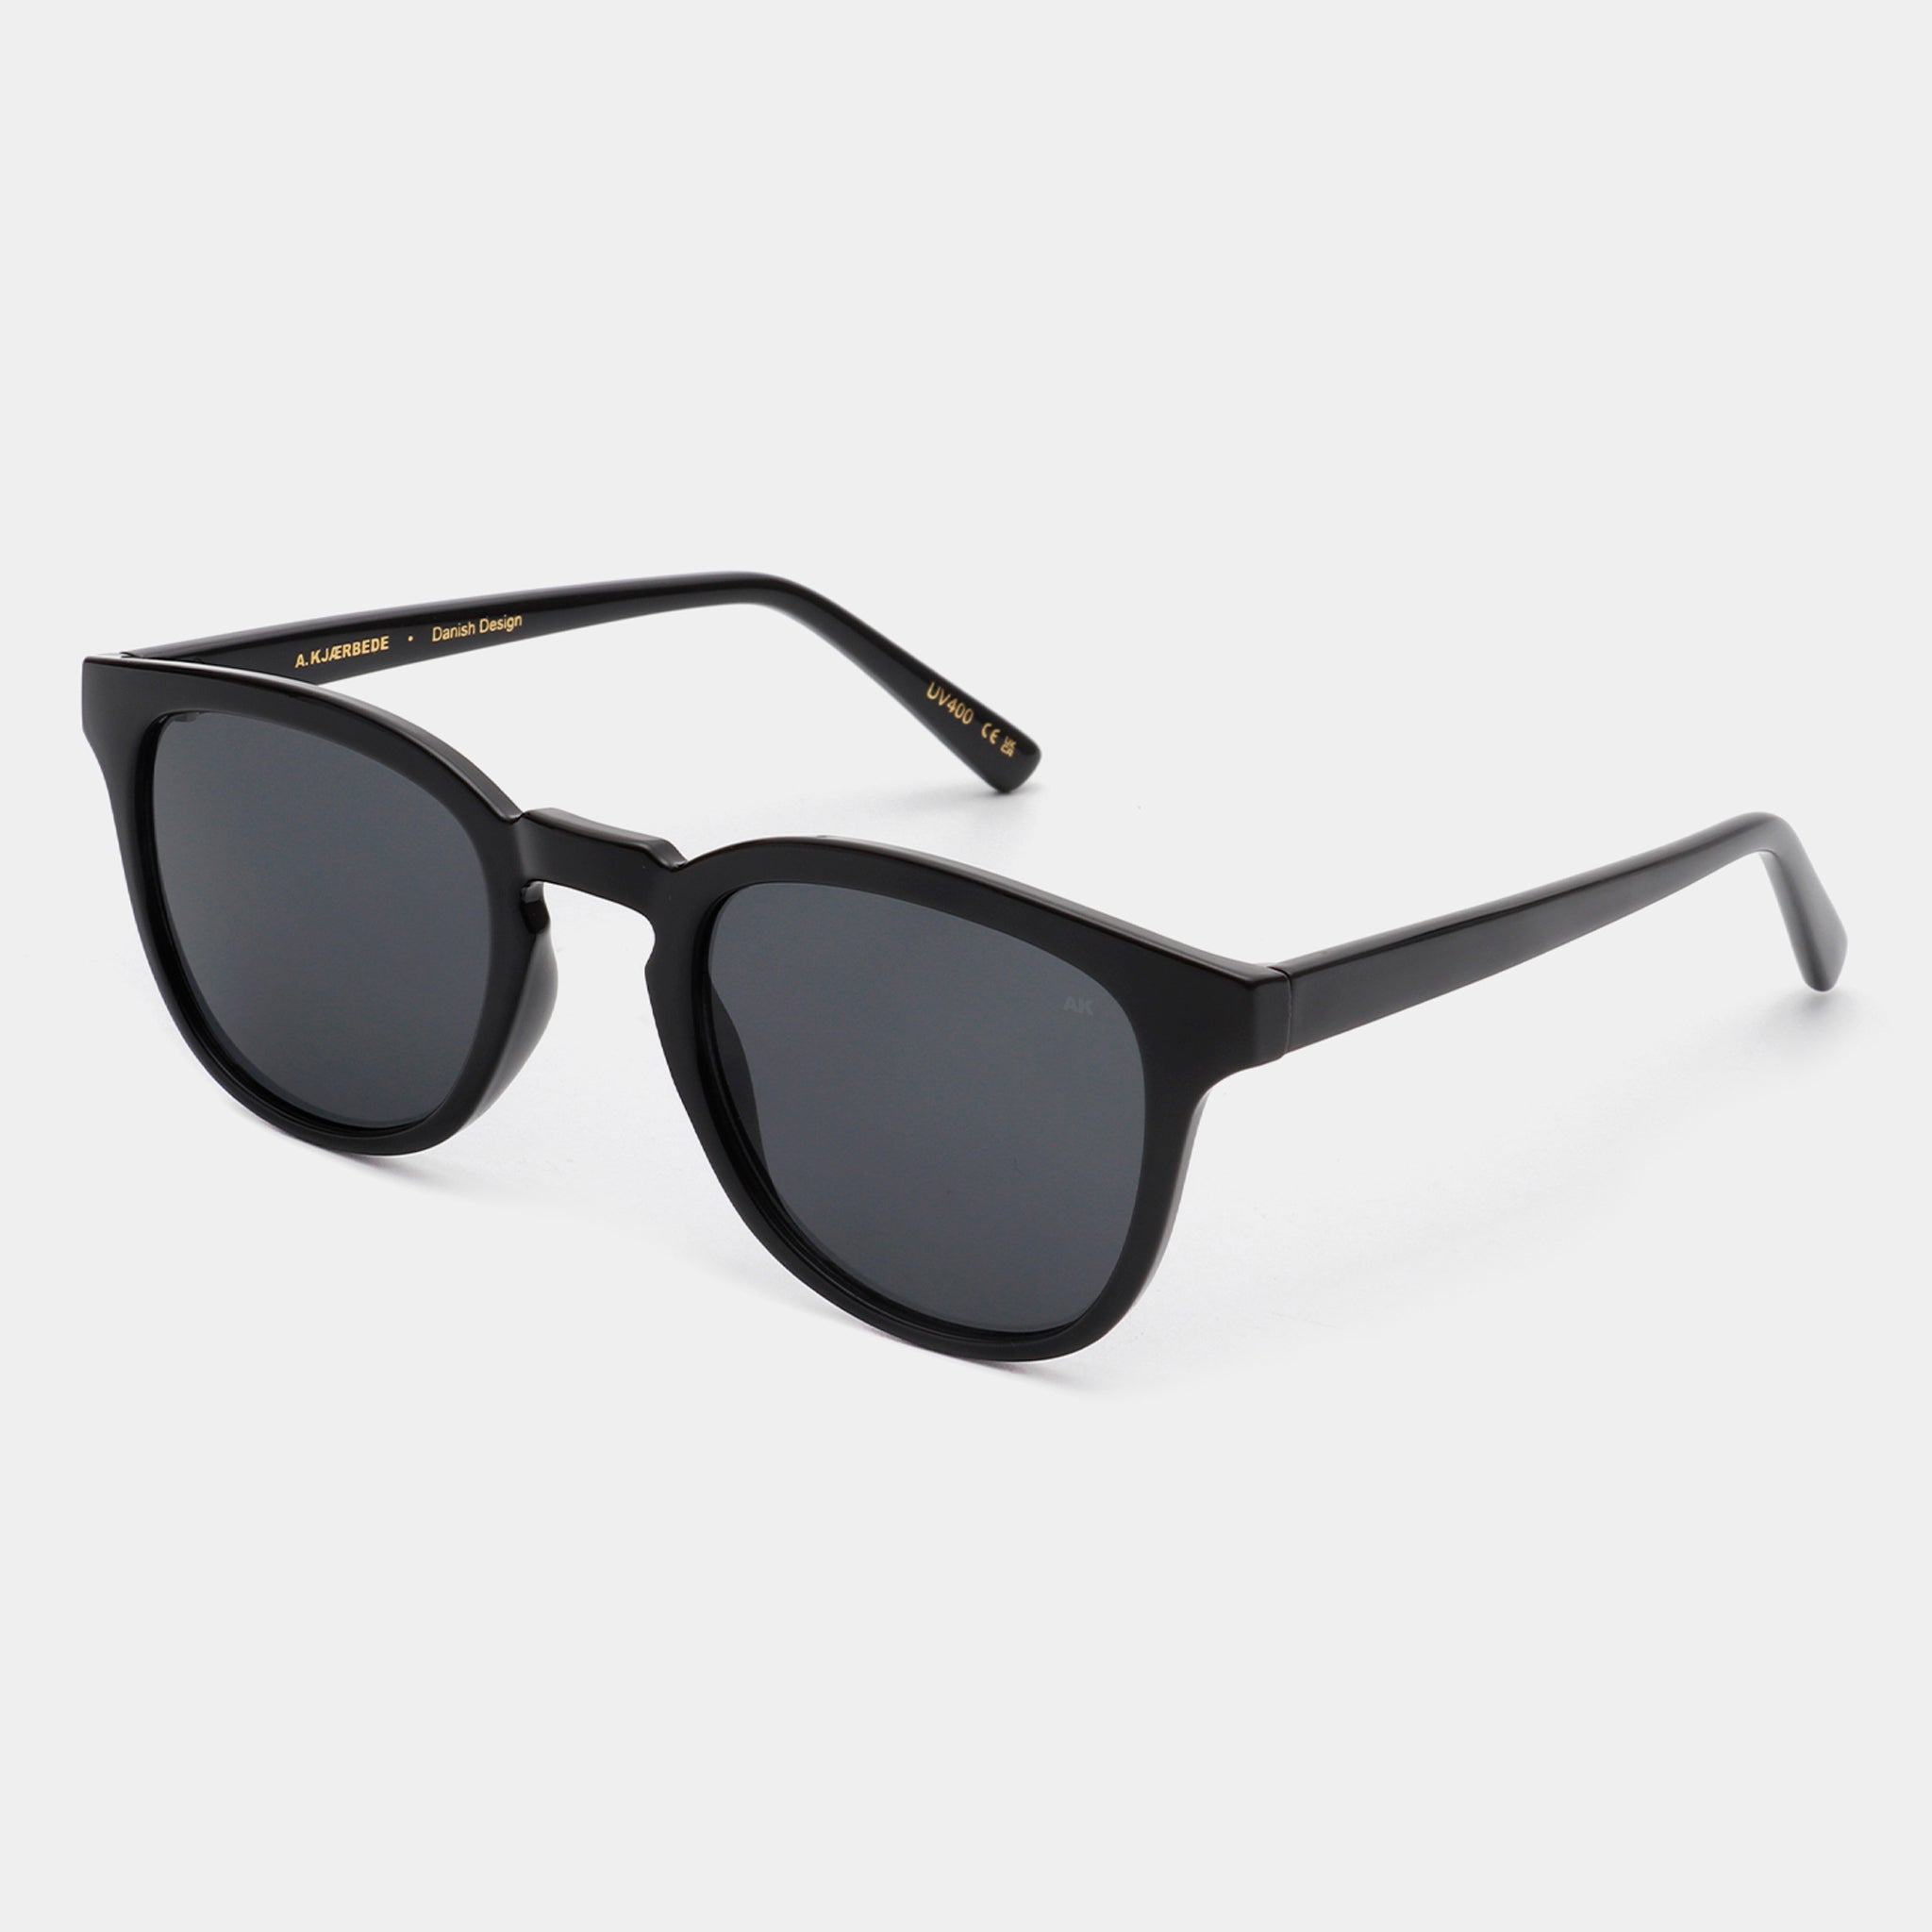 A.Kjaerbede - Sunglasses Bate - Black